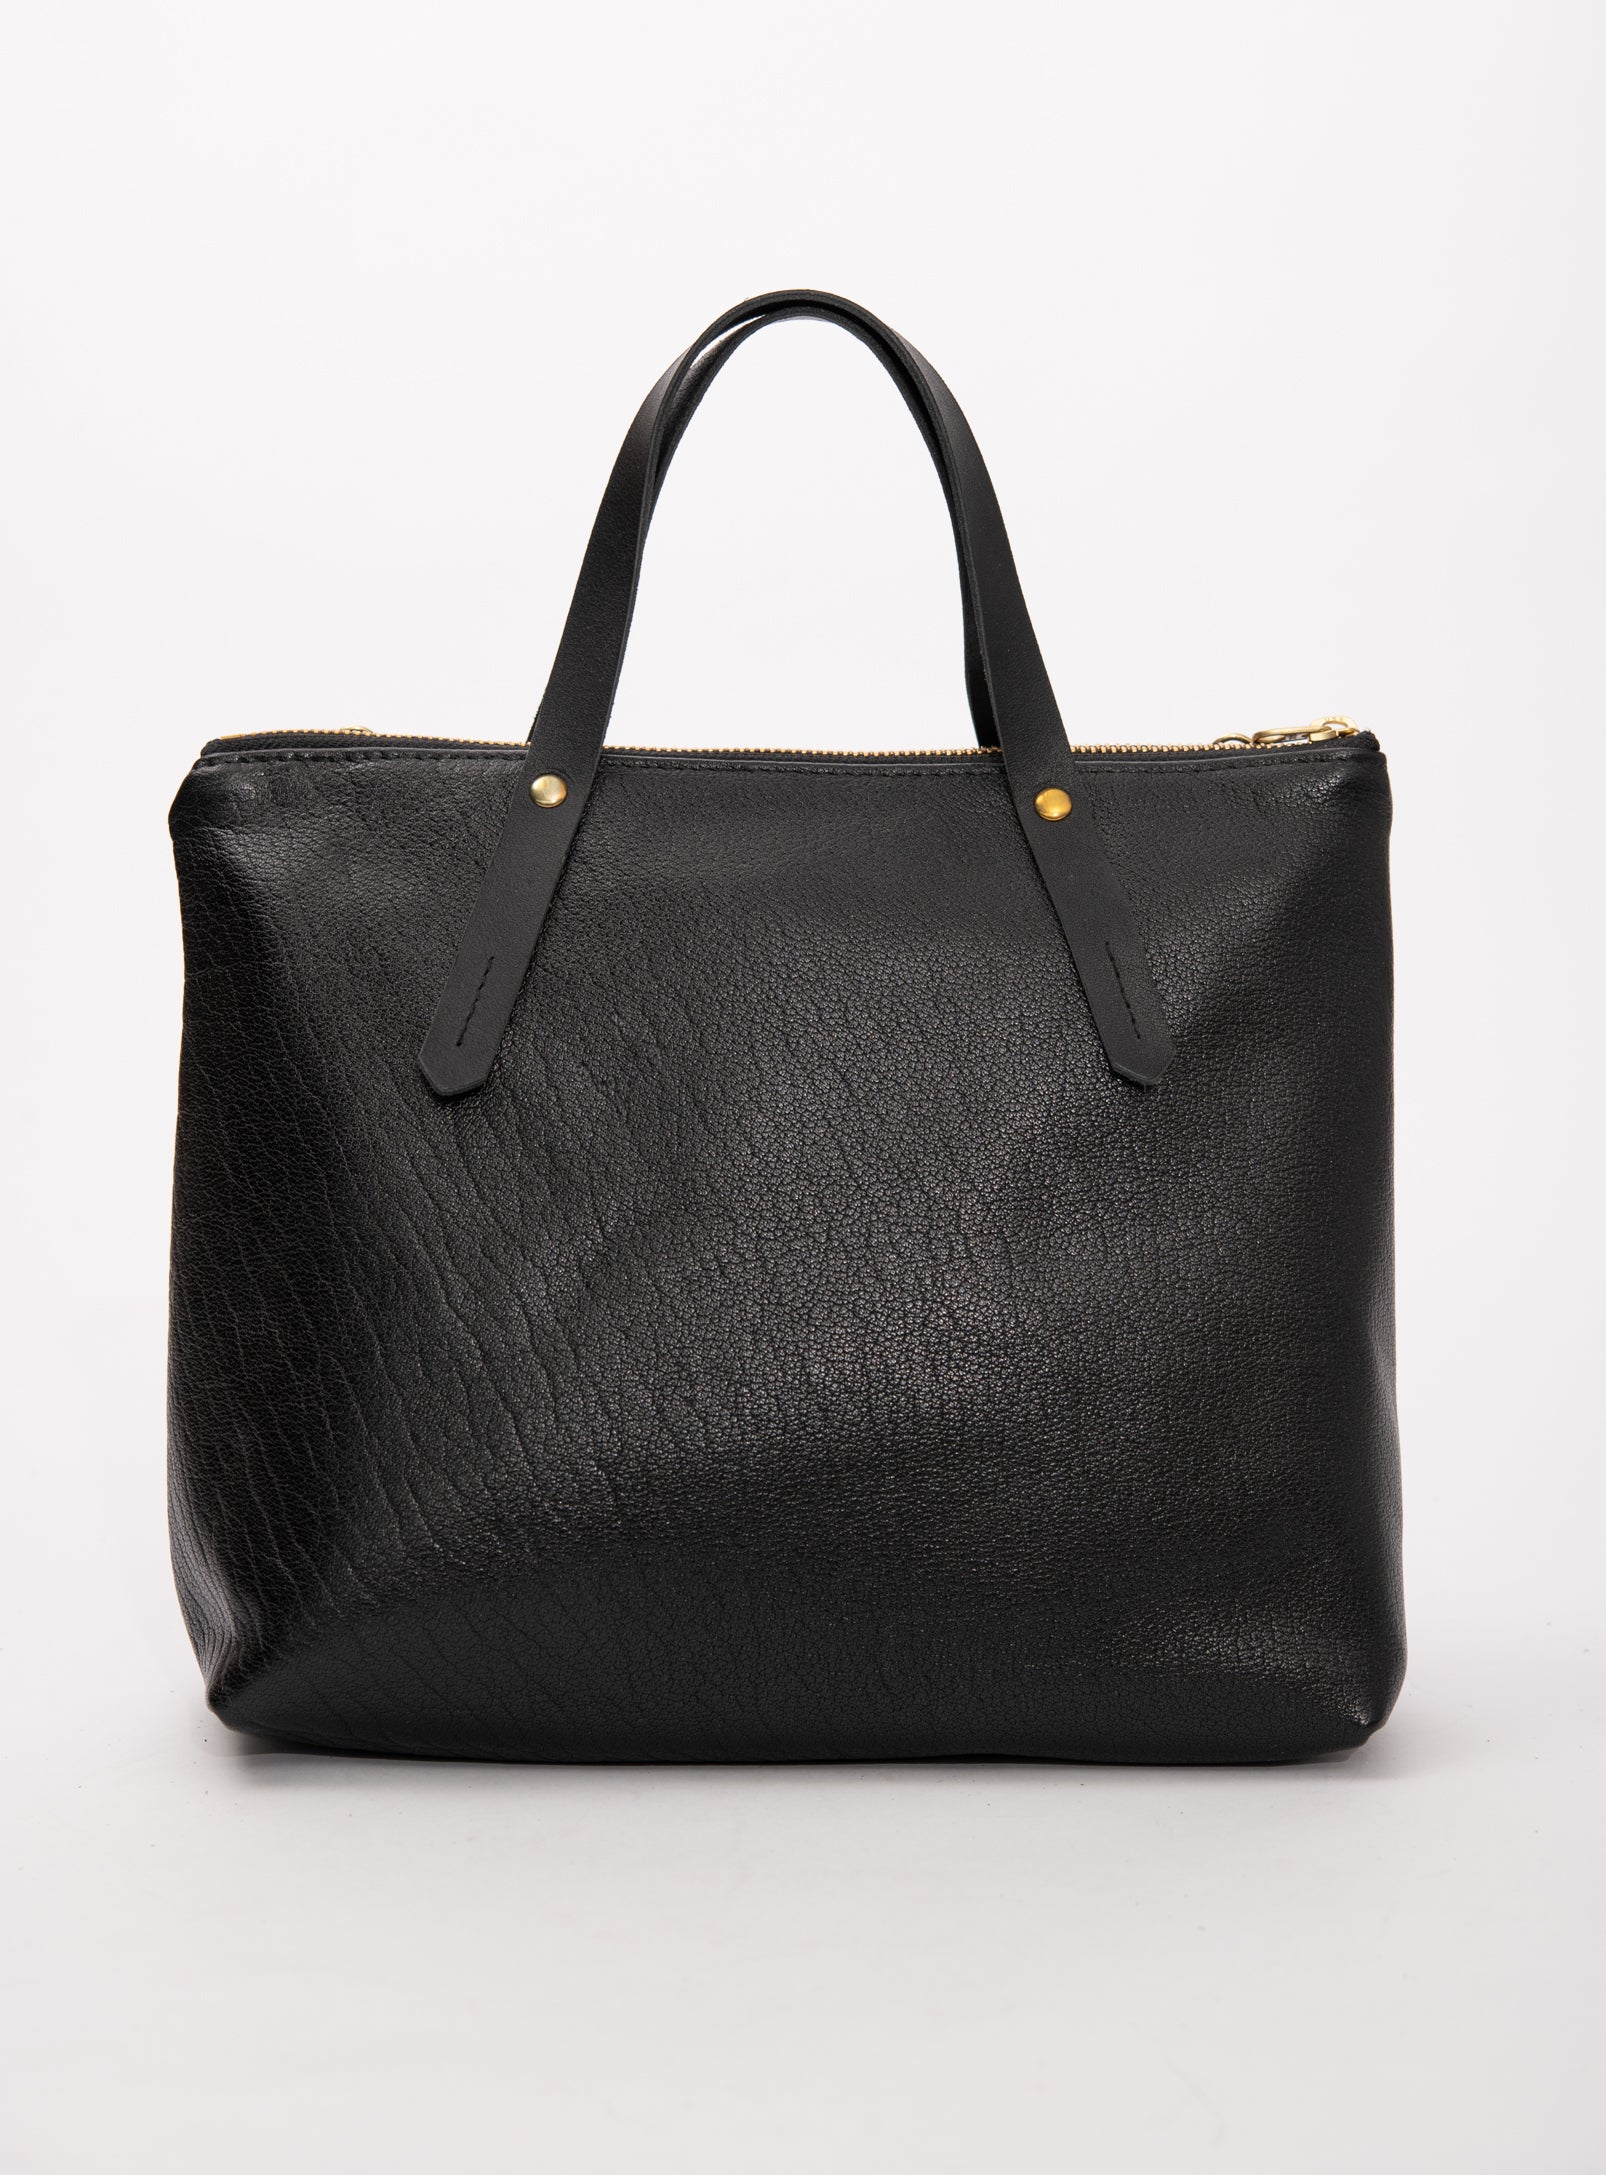 Leather handbag with crossbody strap IBERVILLE model, Veinage handmade in Montreal, Canada